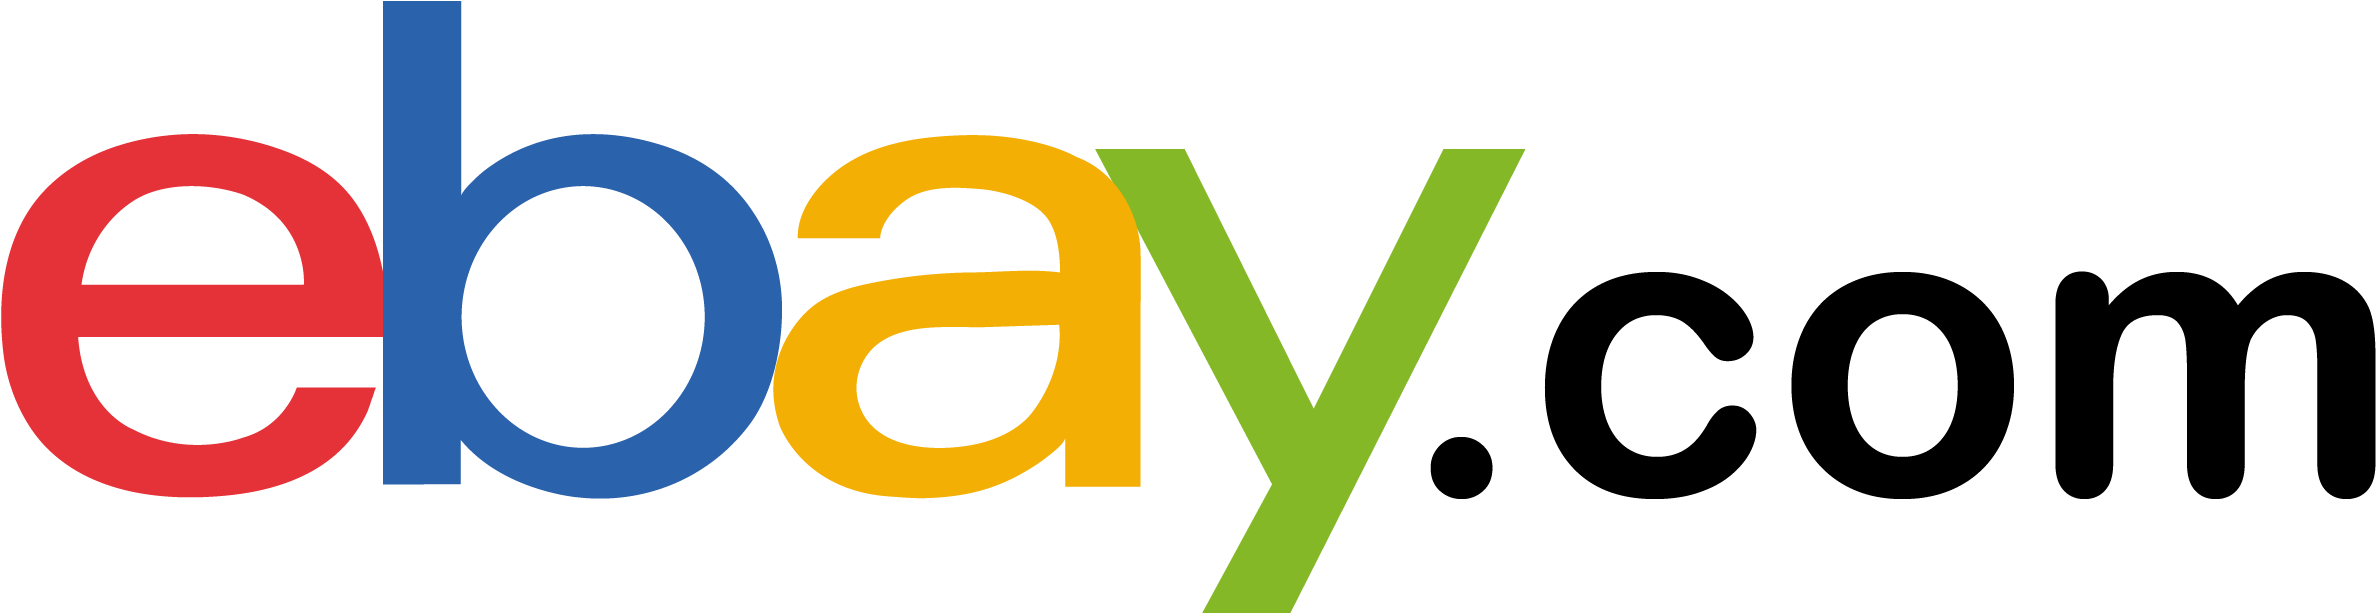 Ebay logo PNG imagen Transparente